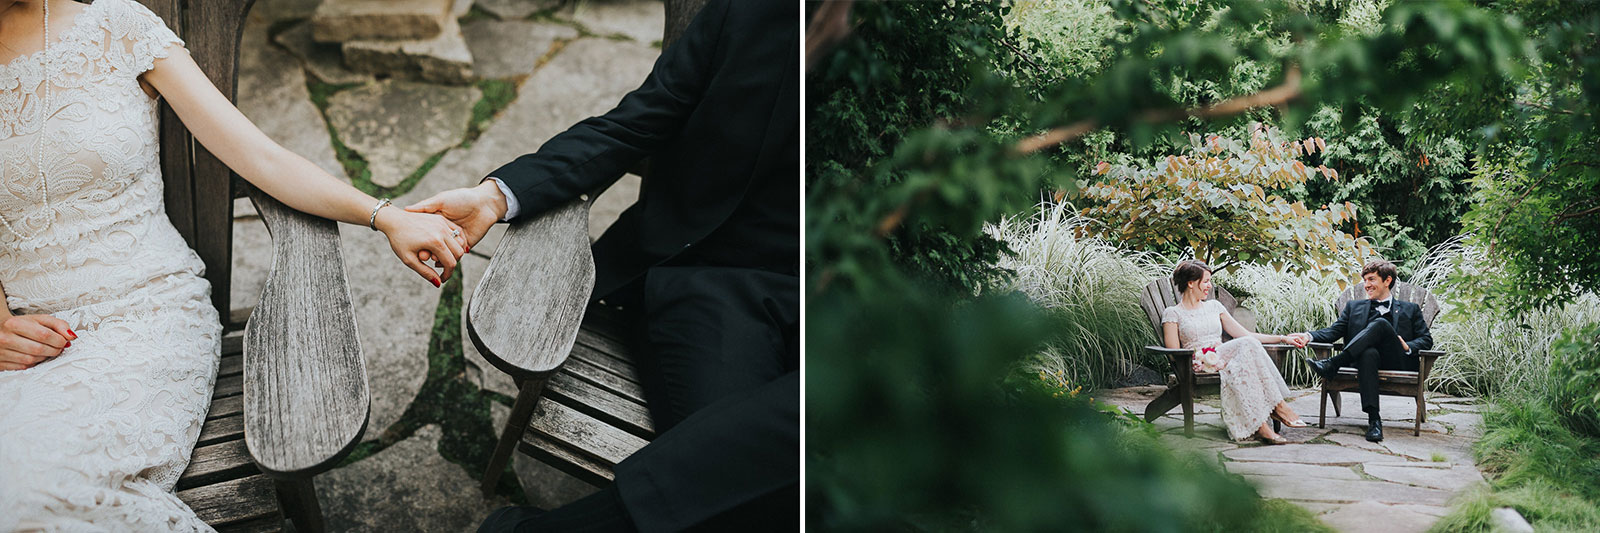 38 bride and groom sittin gholding hands - Megan + Jon // Orpheum Wedding Photography in Madison